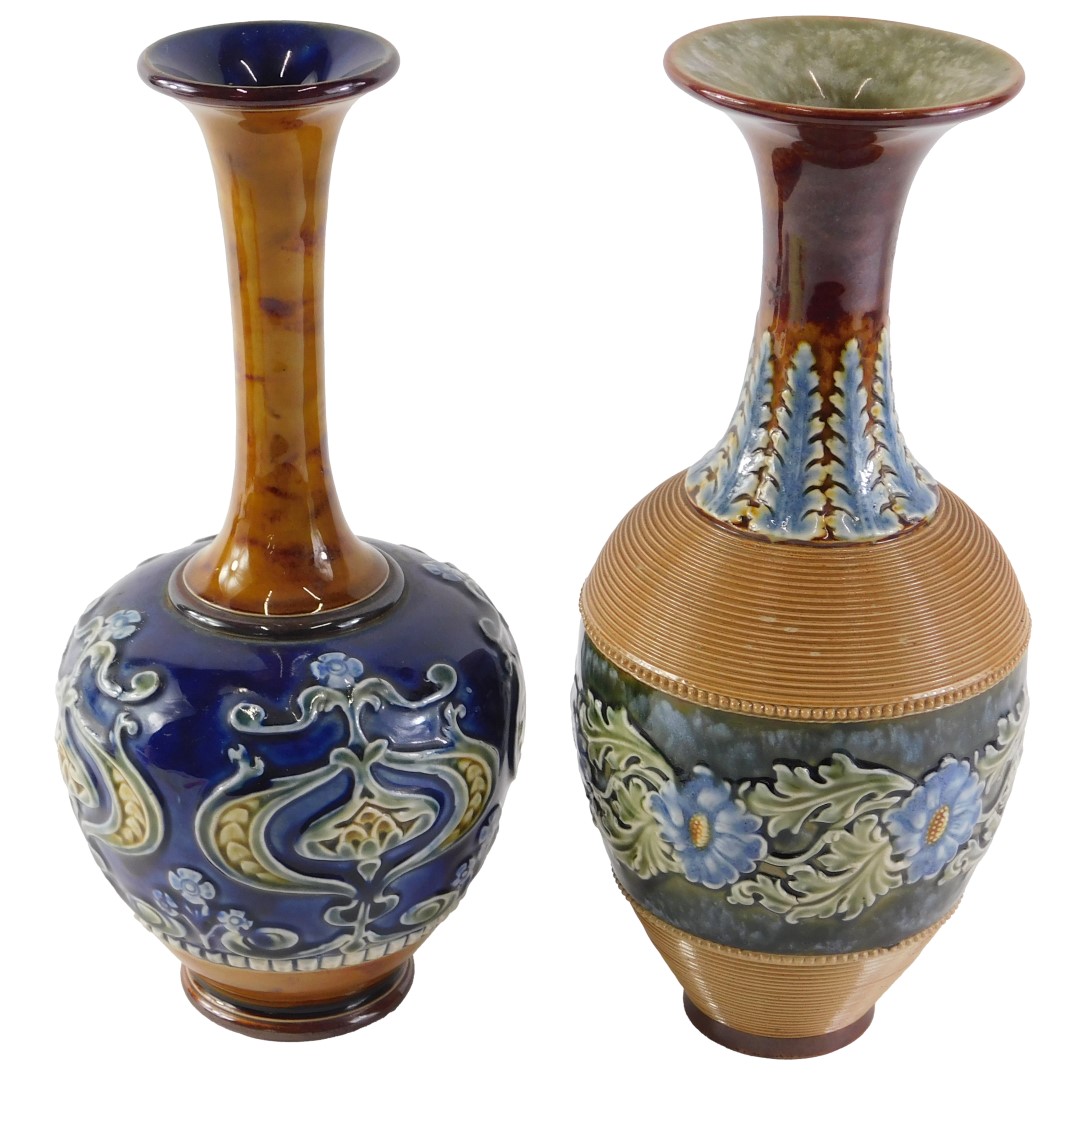 Two 19thC Royal Doulton Lambeth stoneware vases, comprising a bud vase with art nouveau blue glazed